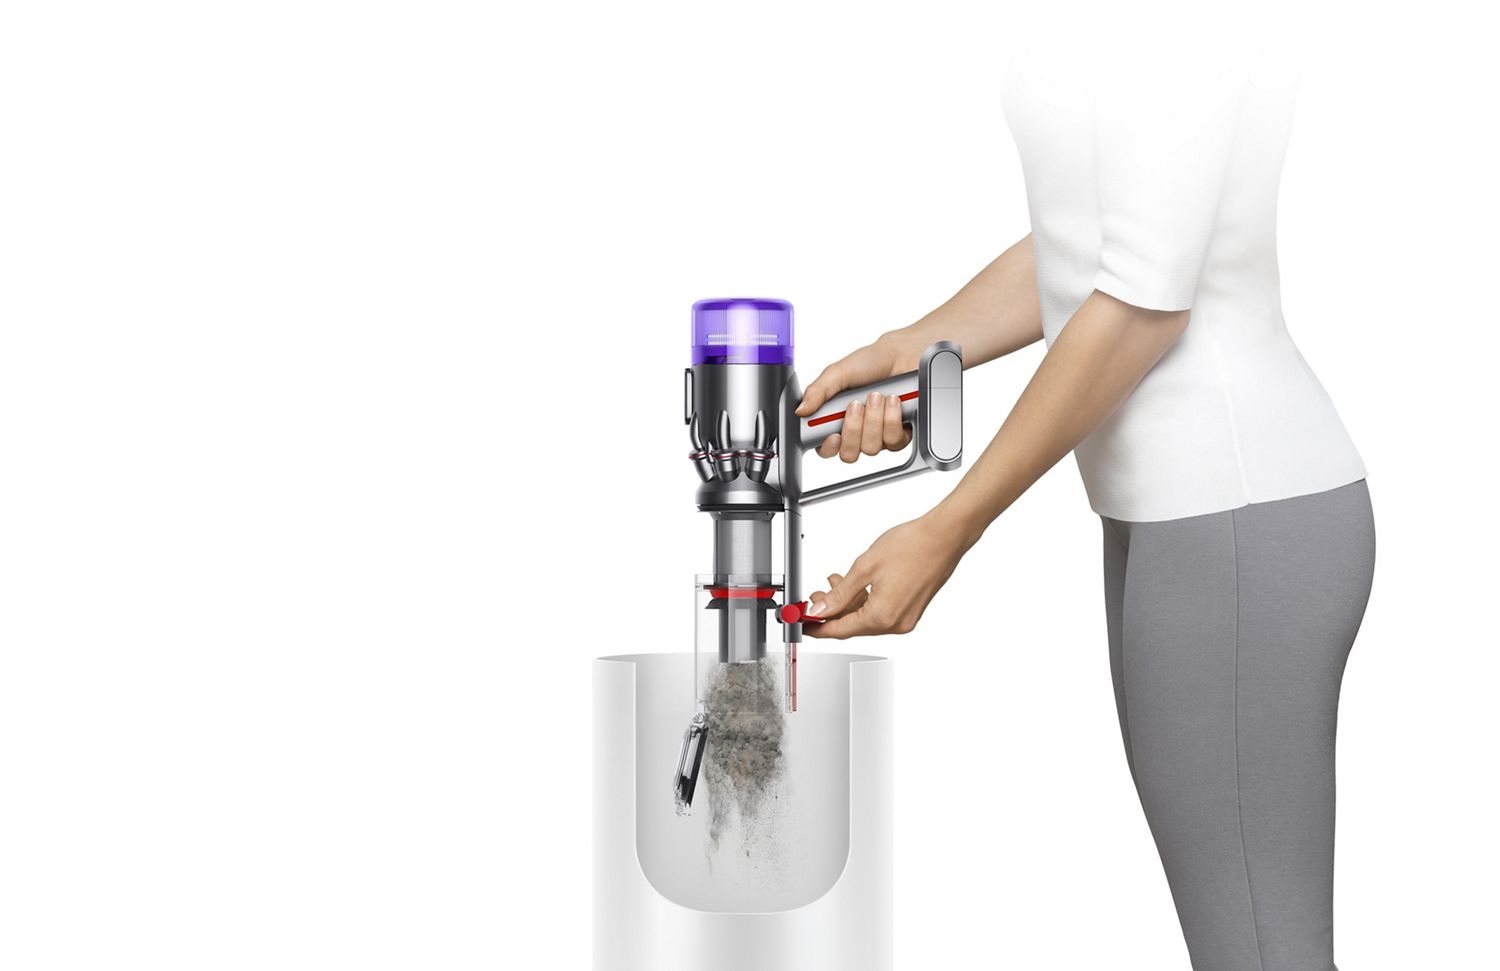 Dyson Humdinger™ Handheld Vacuum Cleaner